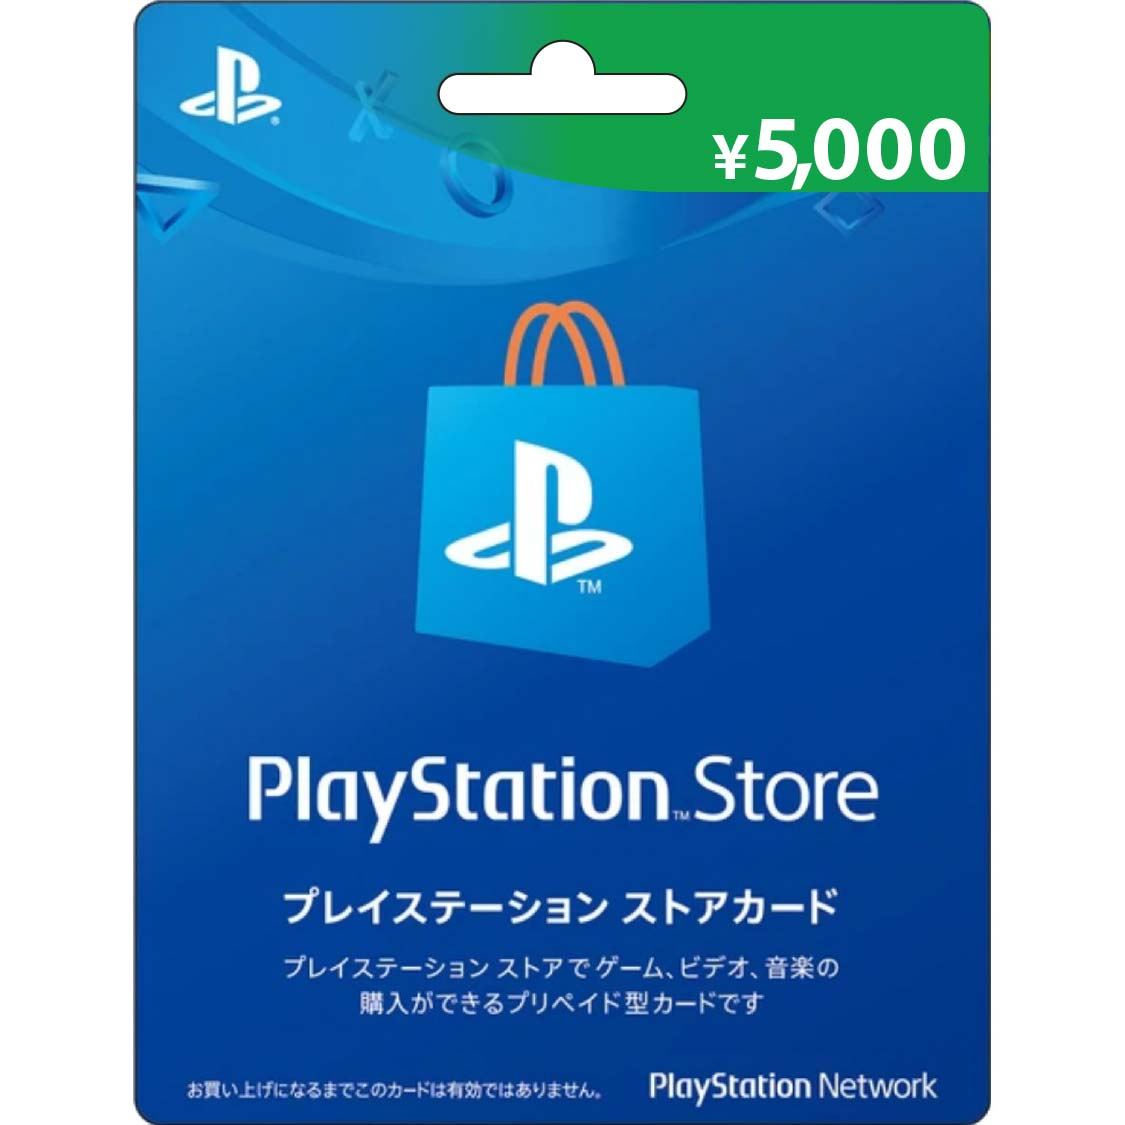 1000 yen psn card